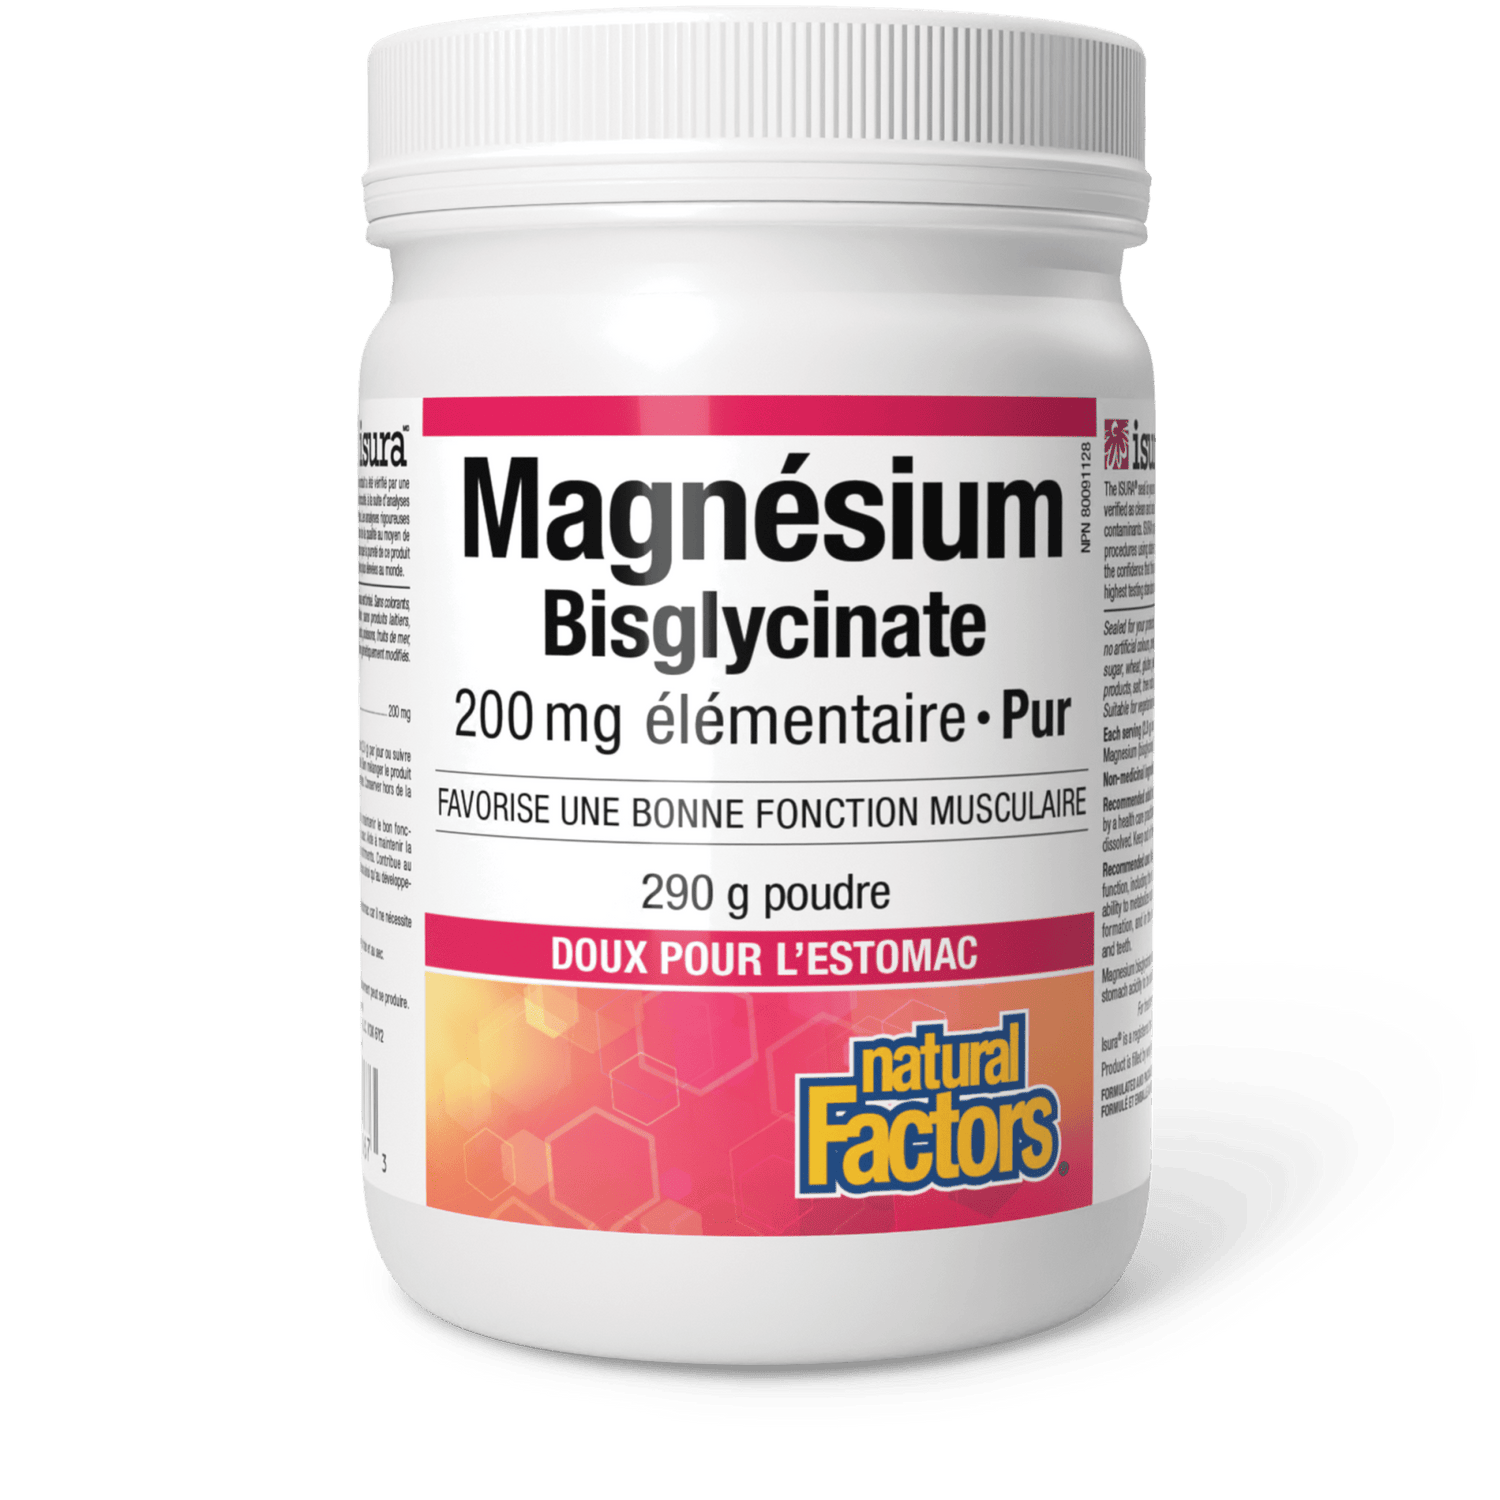 Bisglycinate de magnésium pur 200 mg, Natural Factors|v|image|1667